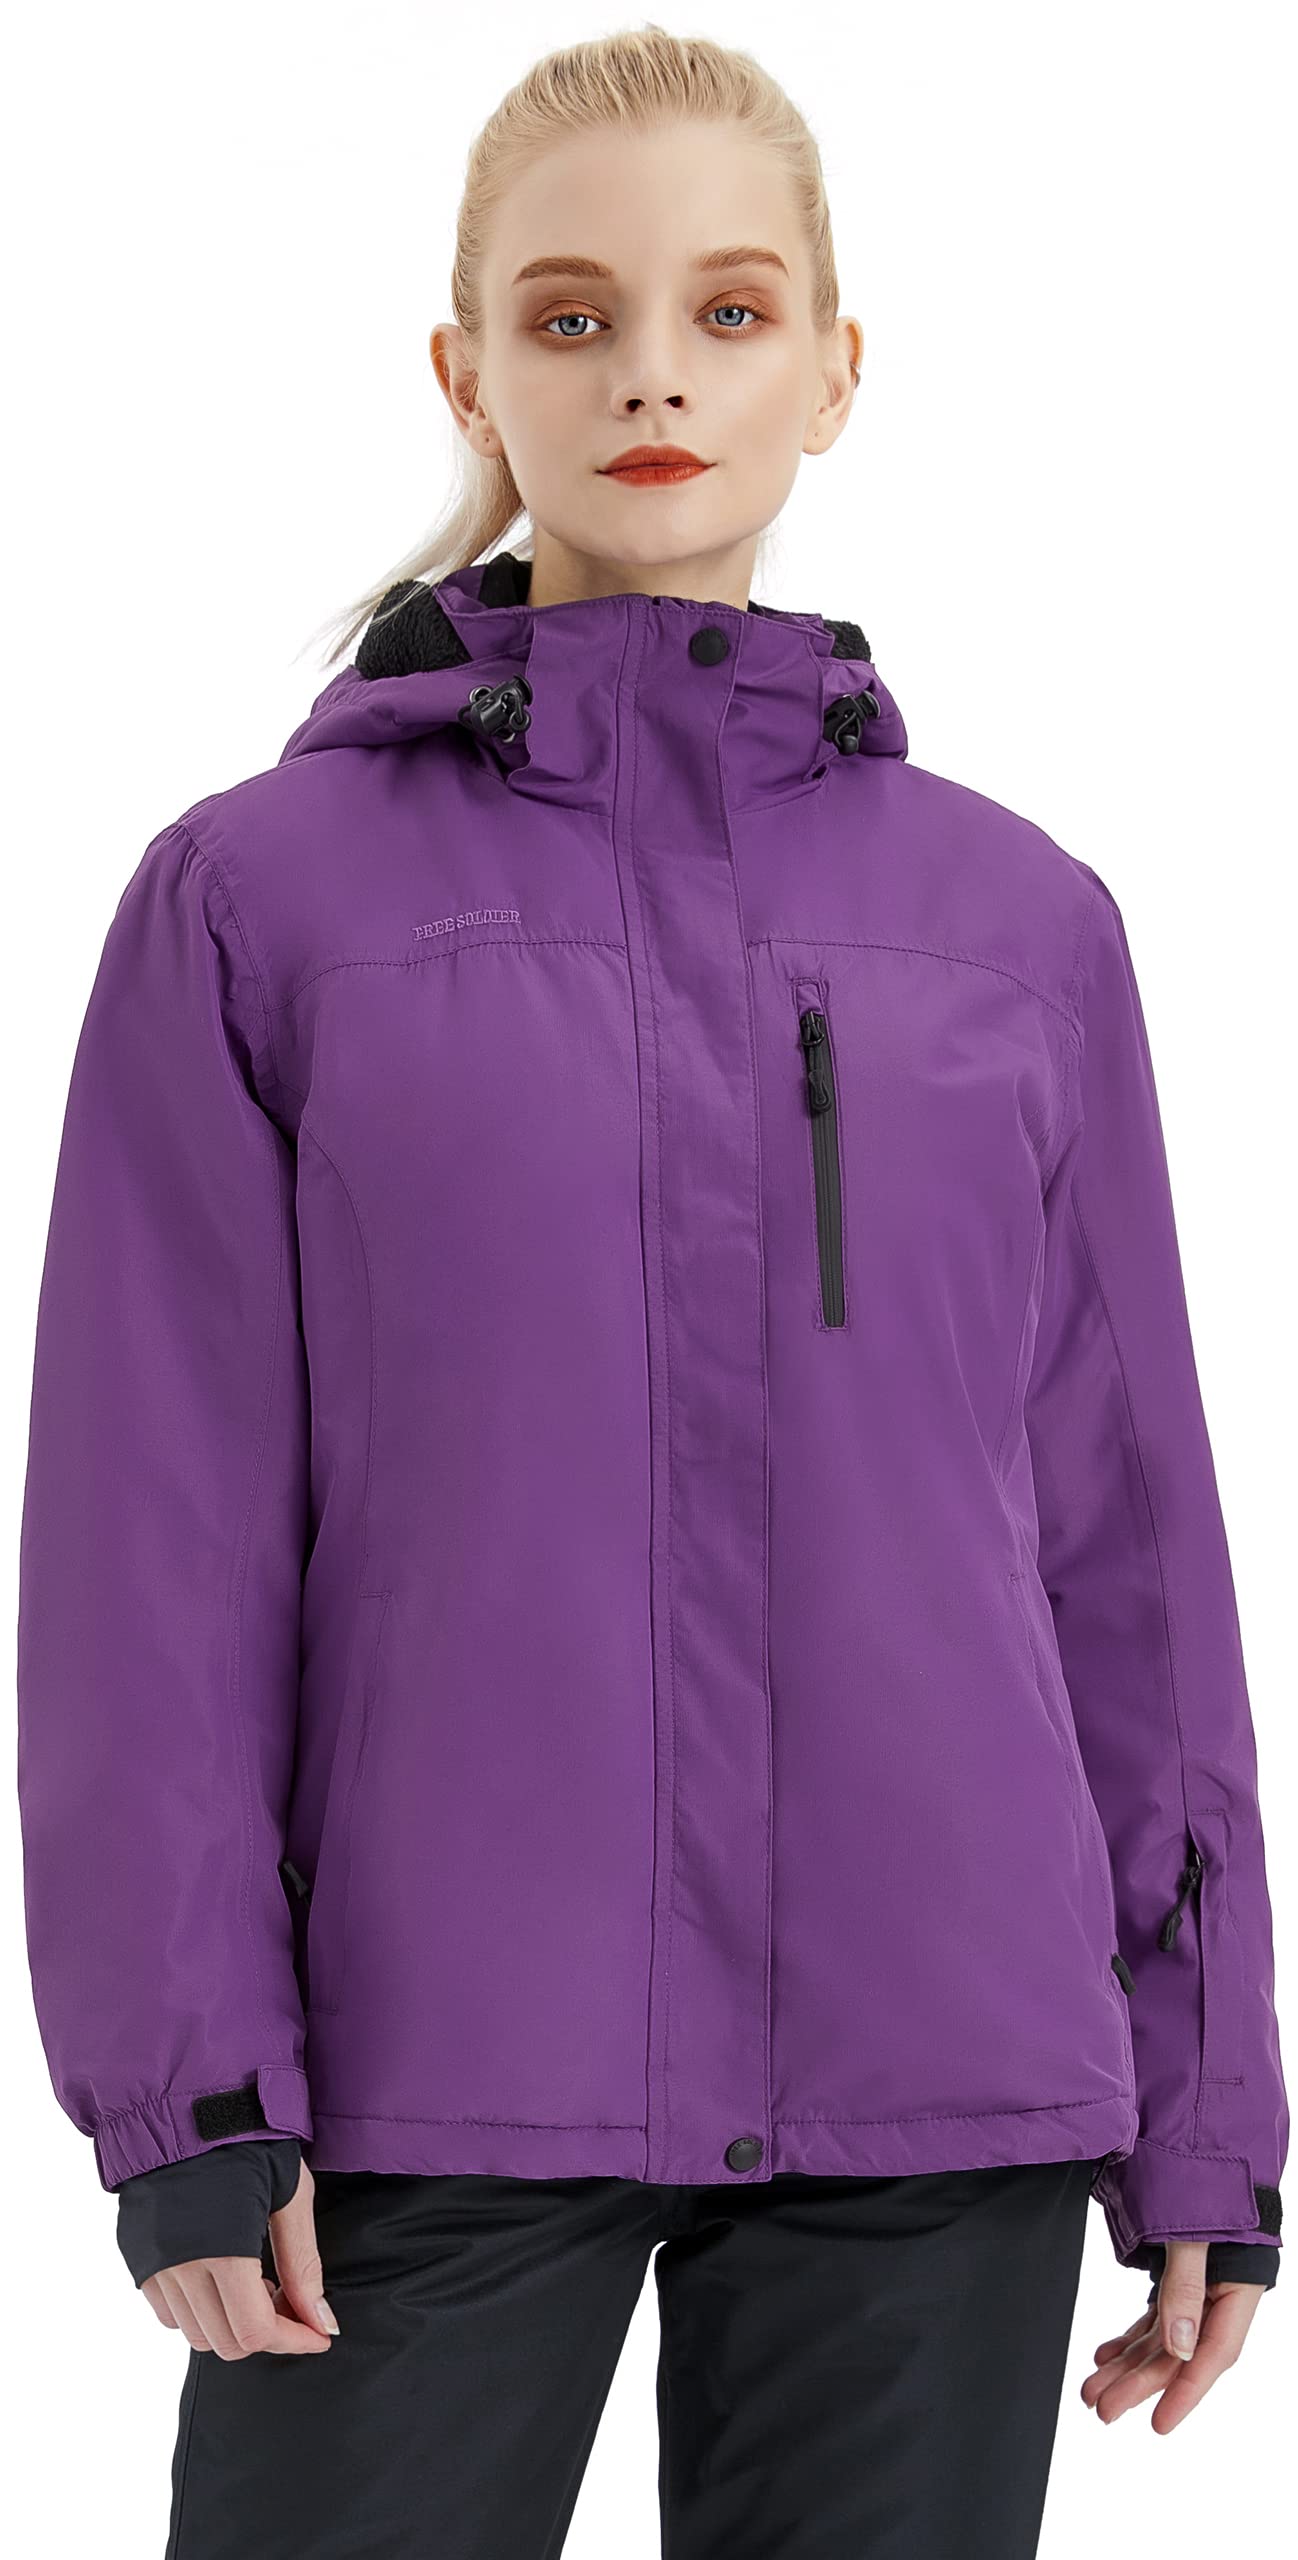 FREE SOLDIER Womens Waterproof Ski Snow Jacket Fleece Lined Warm Winter Rain Jacket with Hood Fully Taped Seams(Purple,XL)